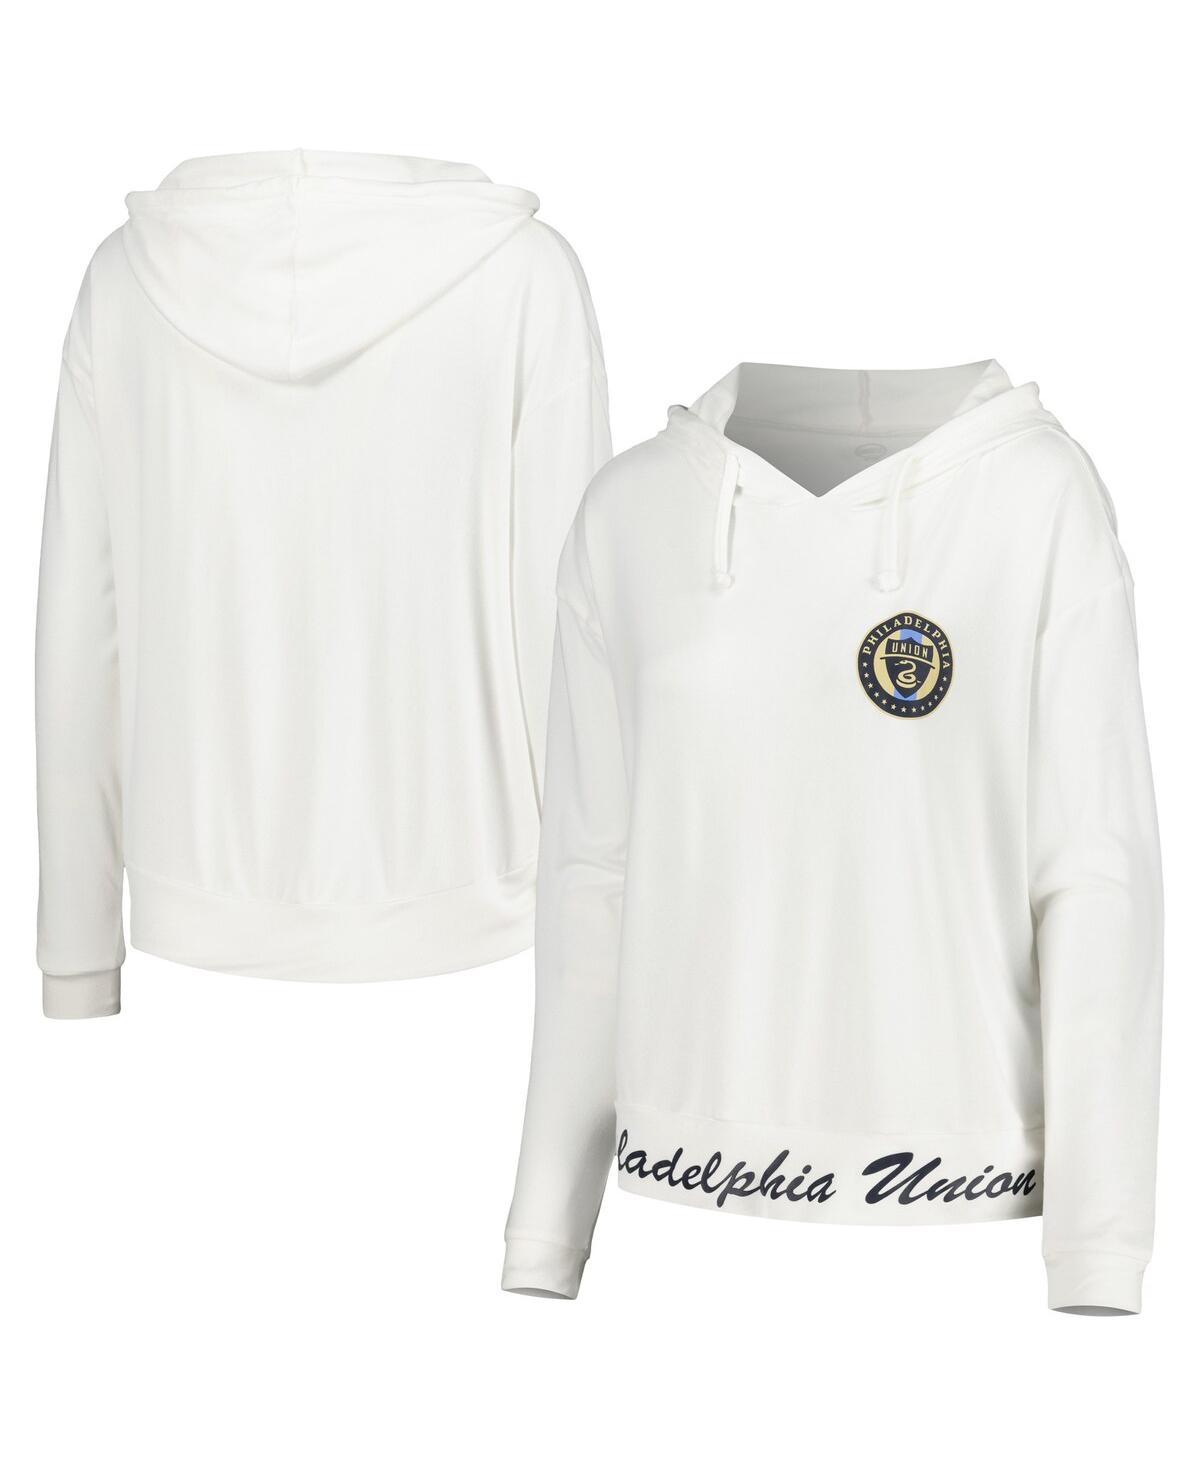 Concepts Sport Women's  White Philadelphia Union Accord Hoodie Long Sleeve Top